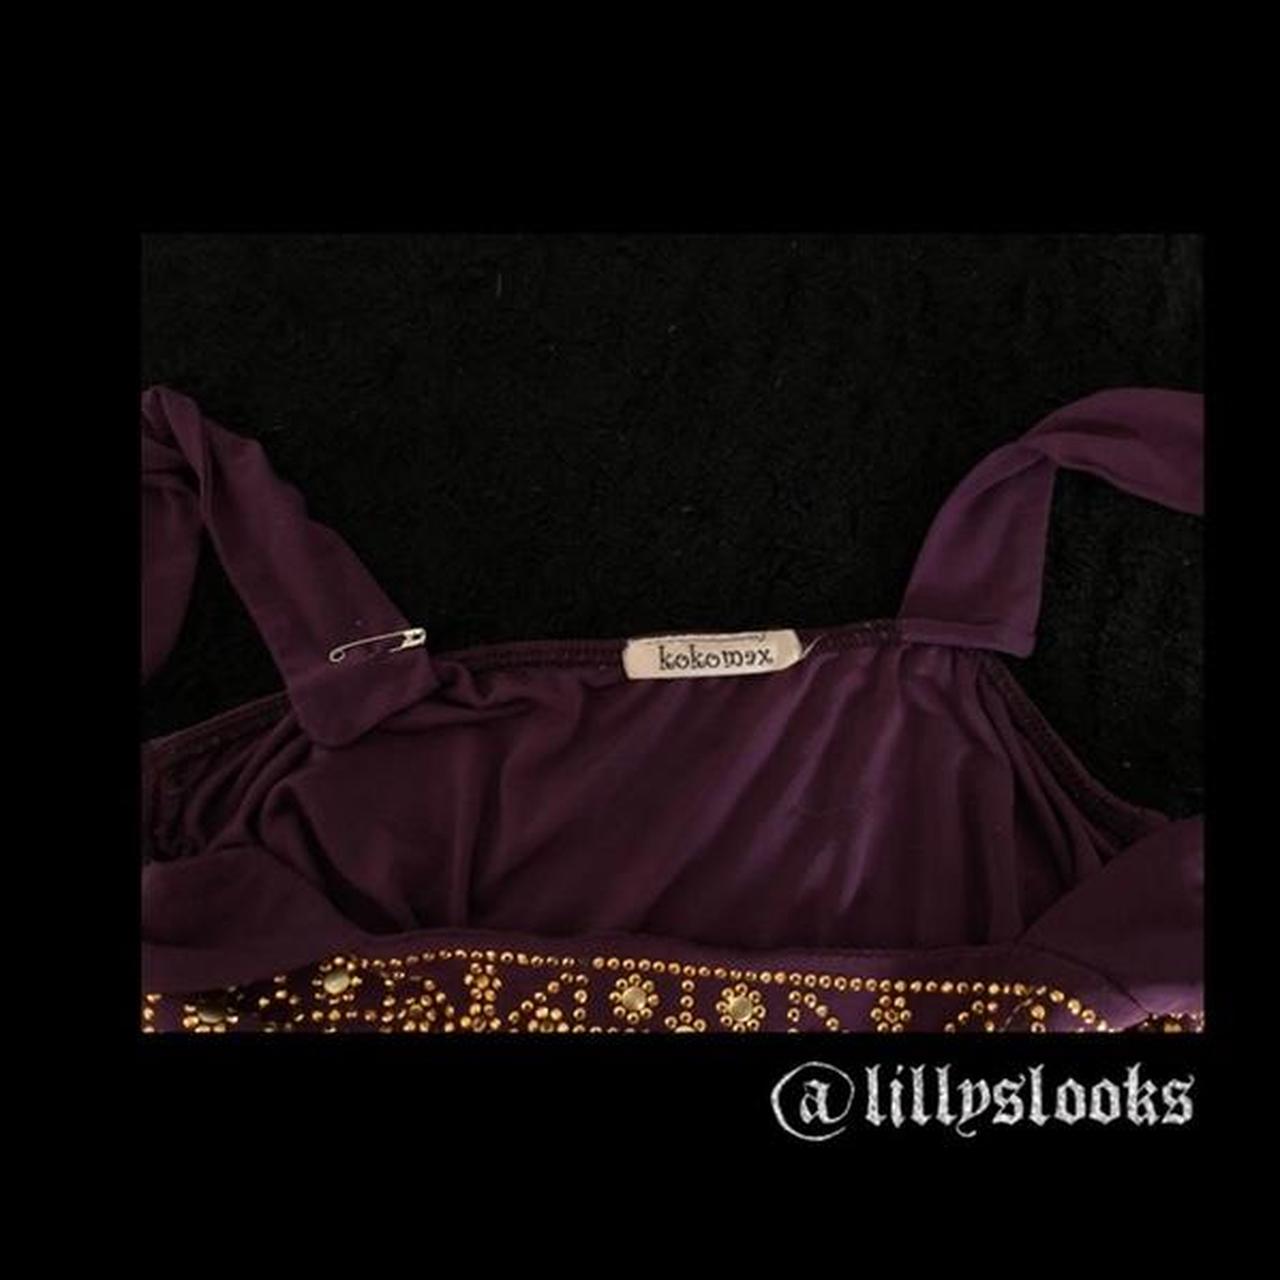 Product Image 4 - !
Purple Y2K kokomax Dress
~the first